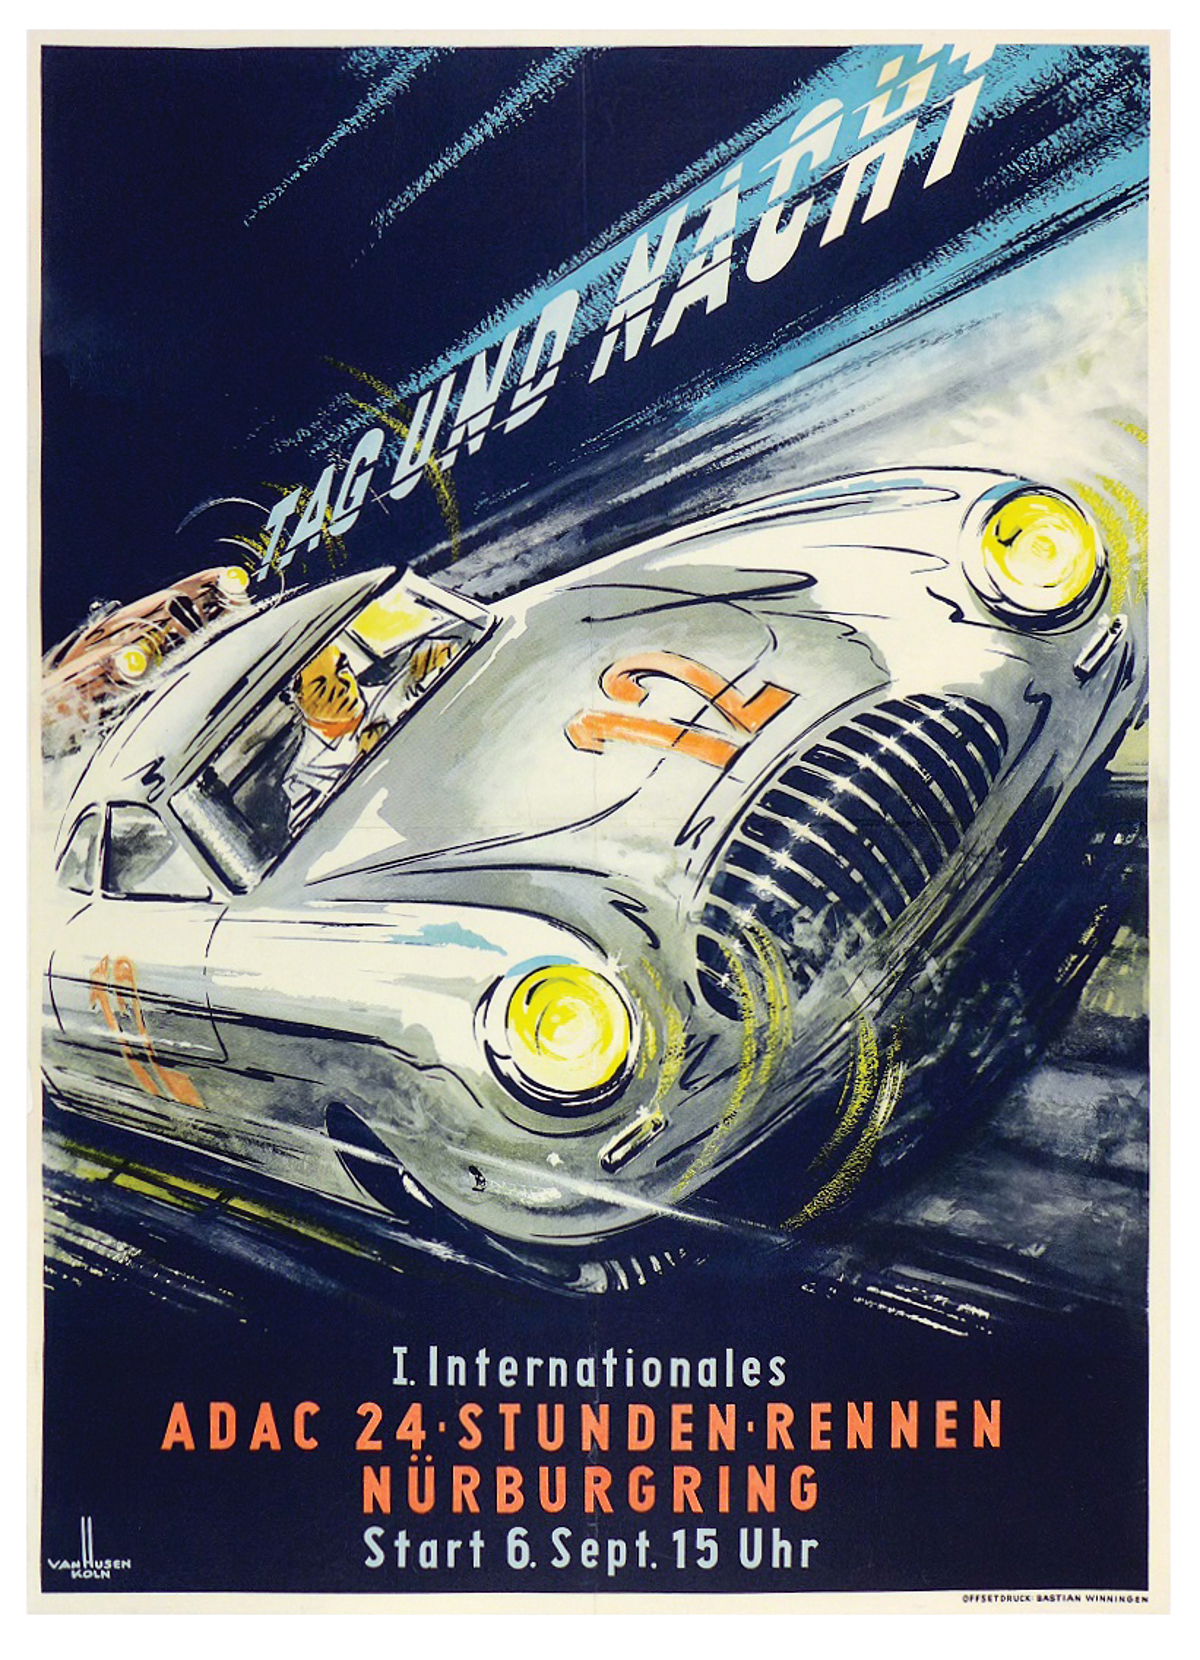 Tag und Nacht ADAC 24 Stunden Rennen Nurburgring 1953 offered in RM Sotheby’s Original Racing Posters online auction